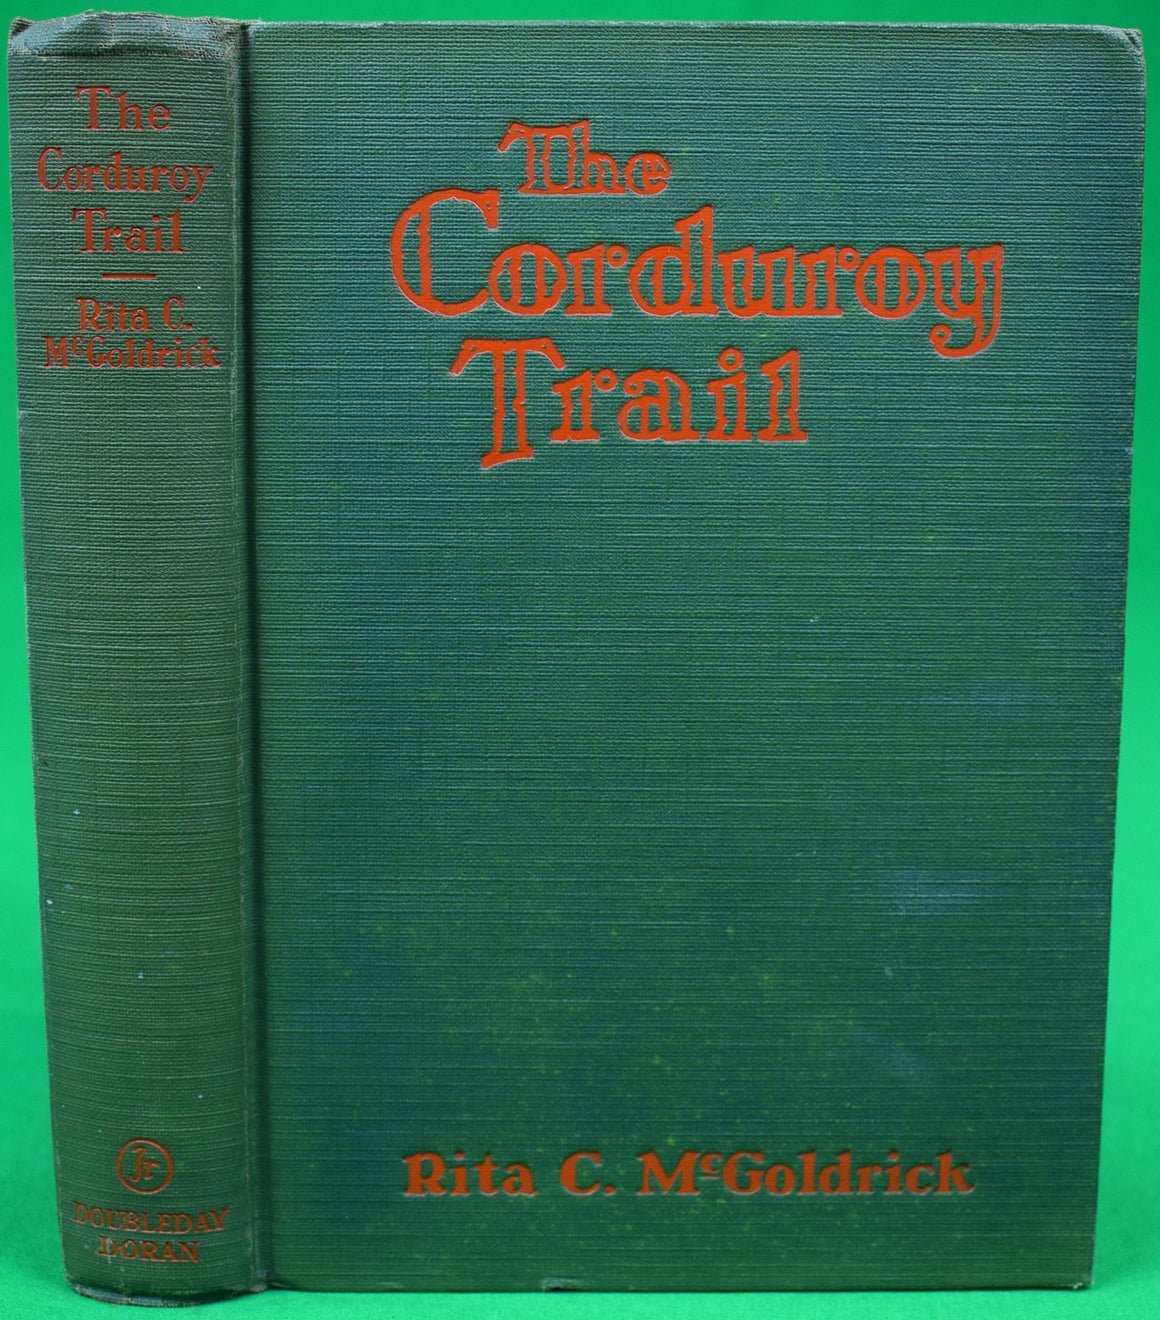 "The Corduroy Trail" 1934 MCGOLDRICK, Rita C.